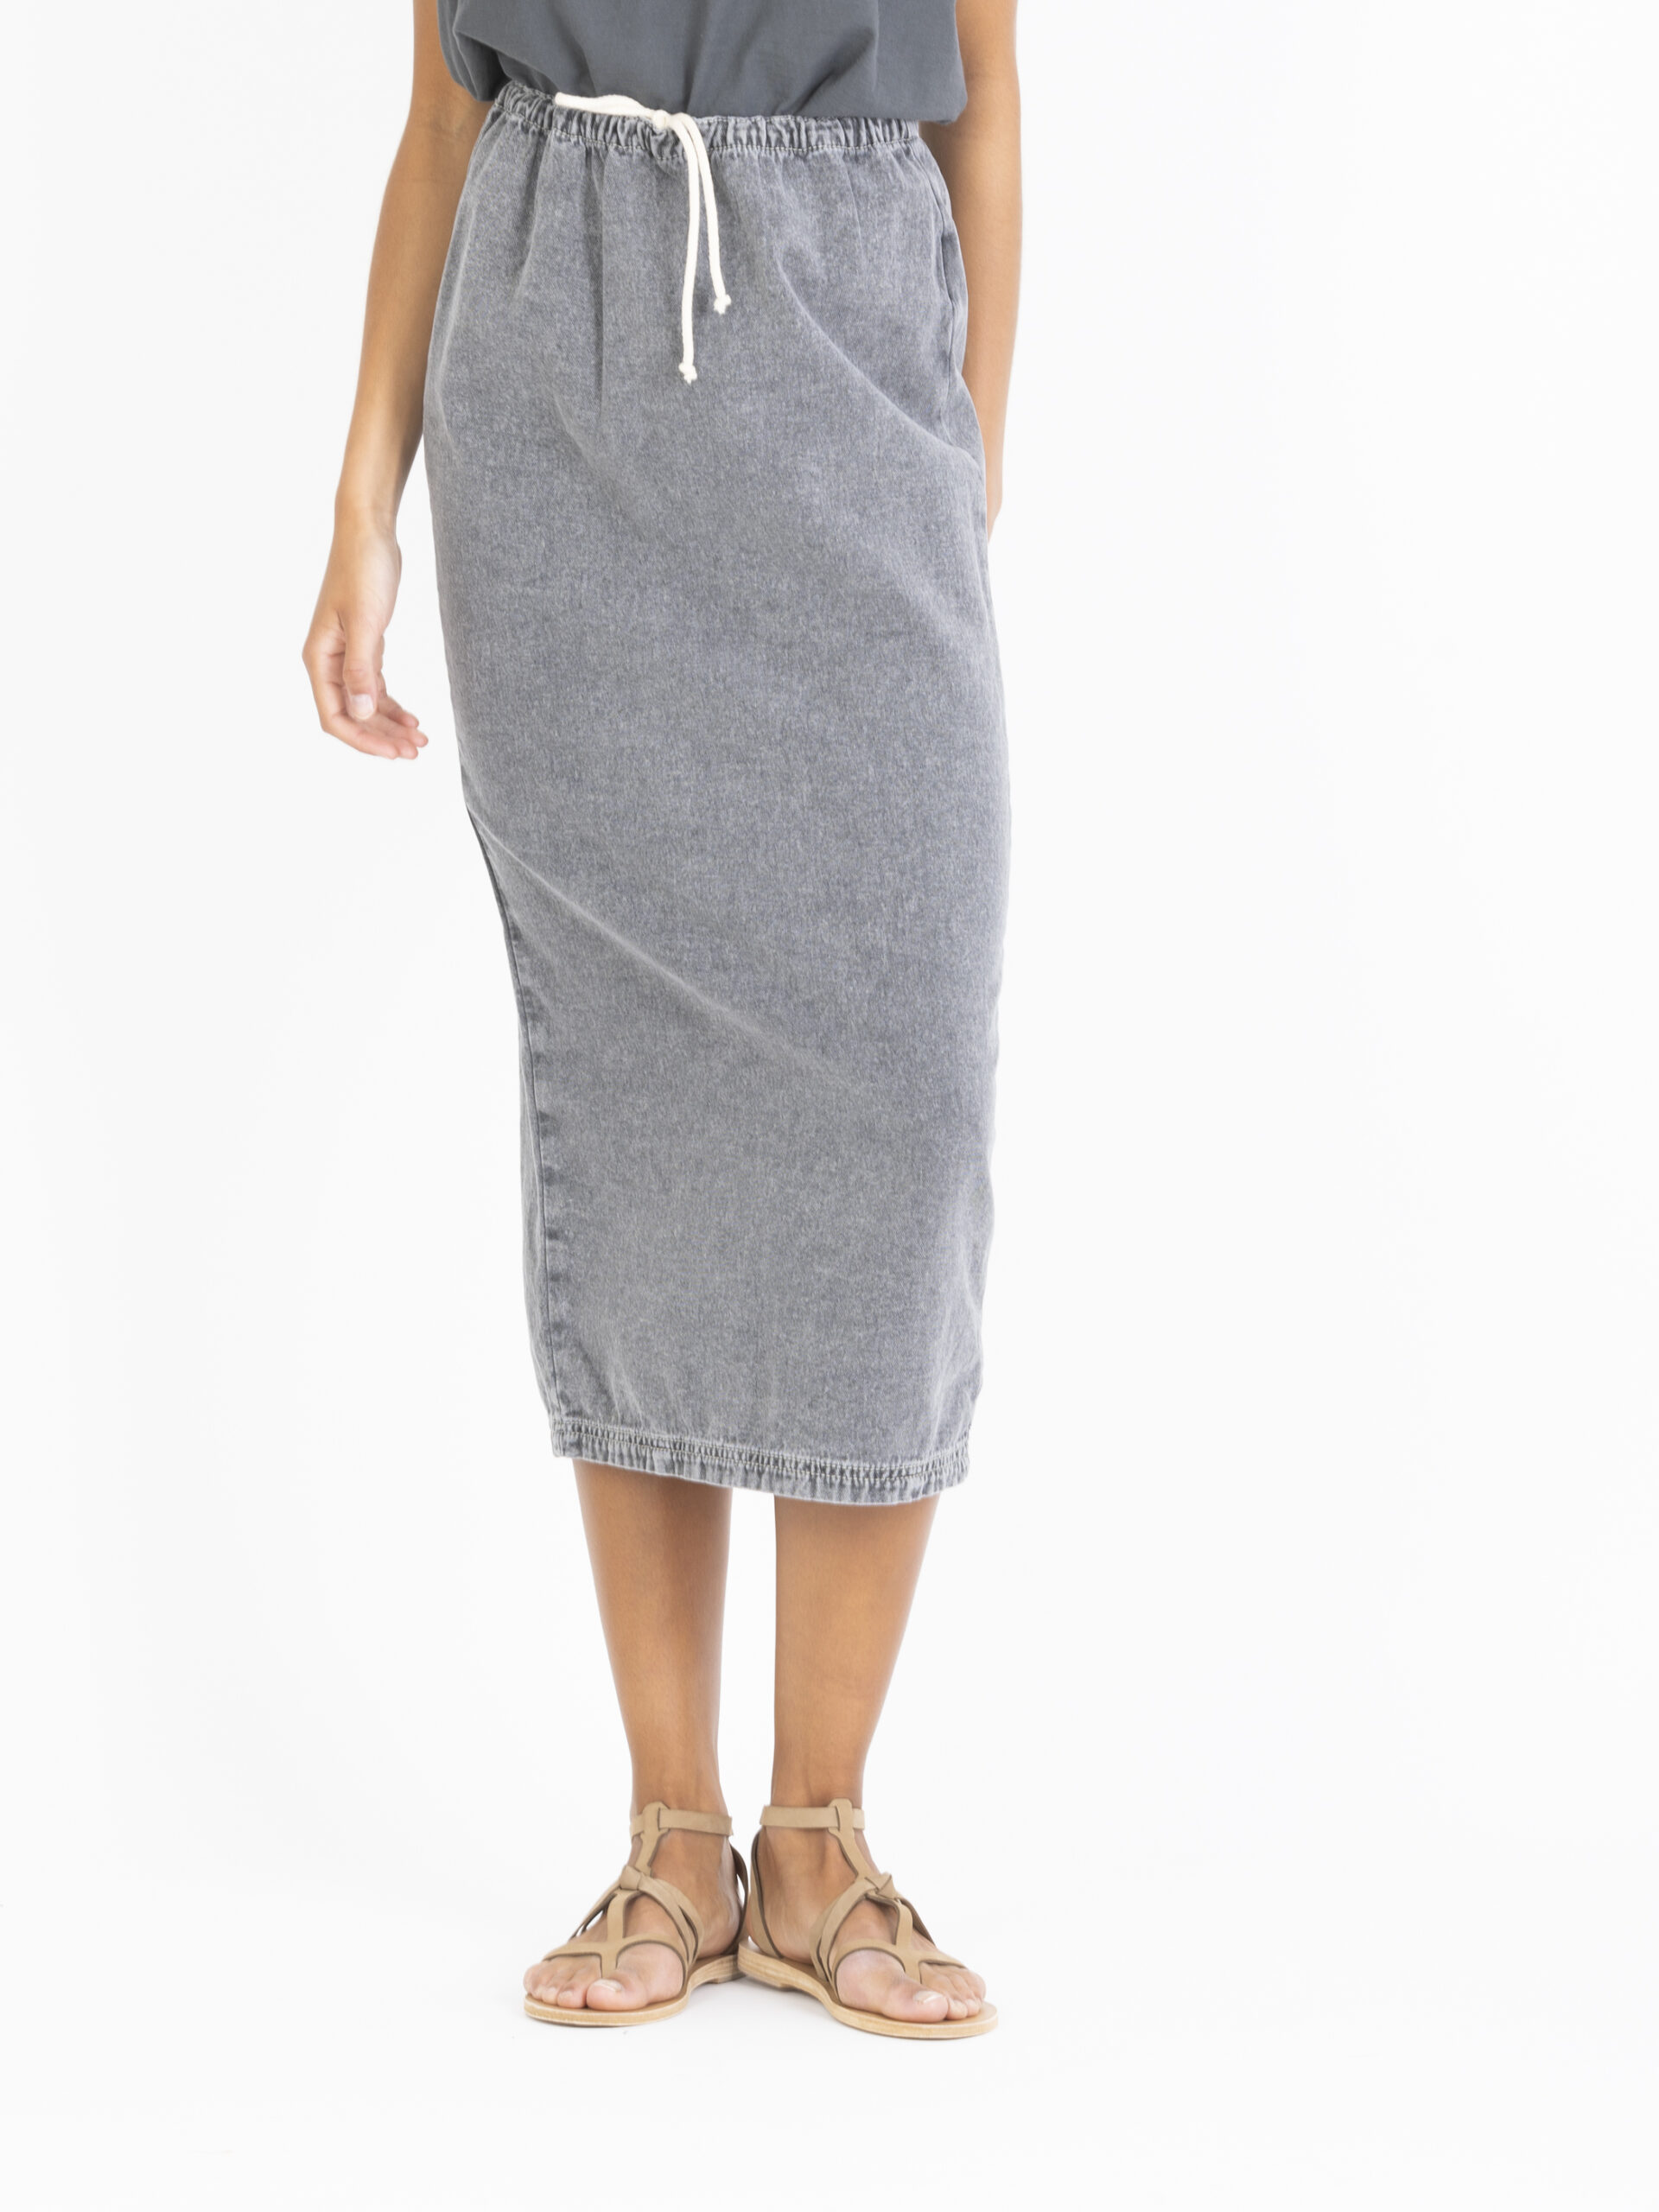 jazy-skirt-denim-tube-elastic-waist-drawstring-grey-american-vintage-matchboxathens